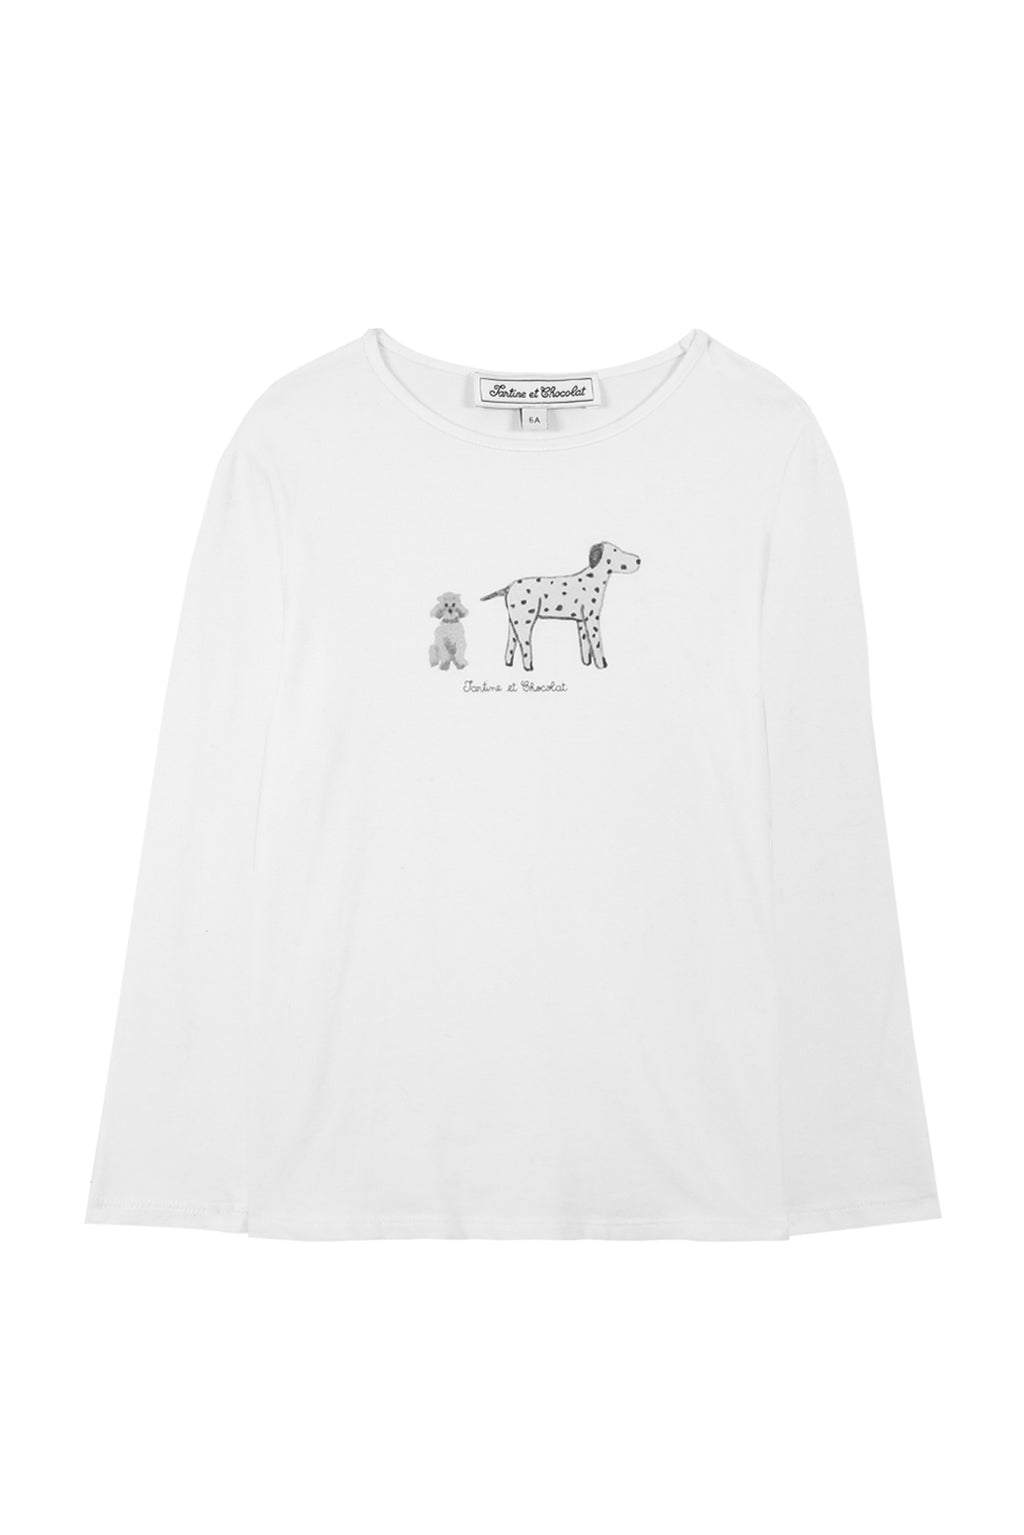 T-shirt - Illustration eggplant dogs